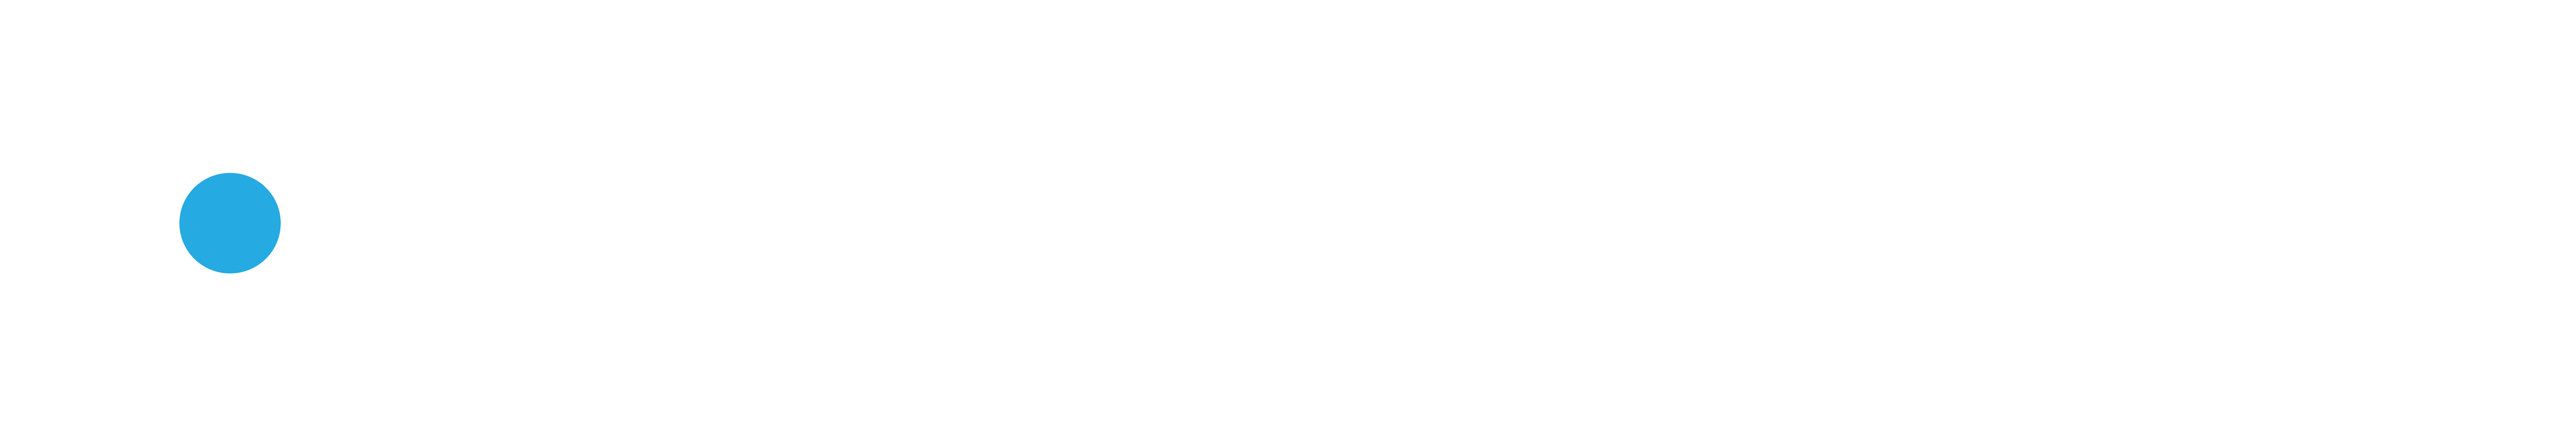 Fairmont Tools Logo - Automation Testing Tools & Training - Beaufort Fairmont